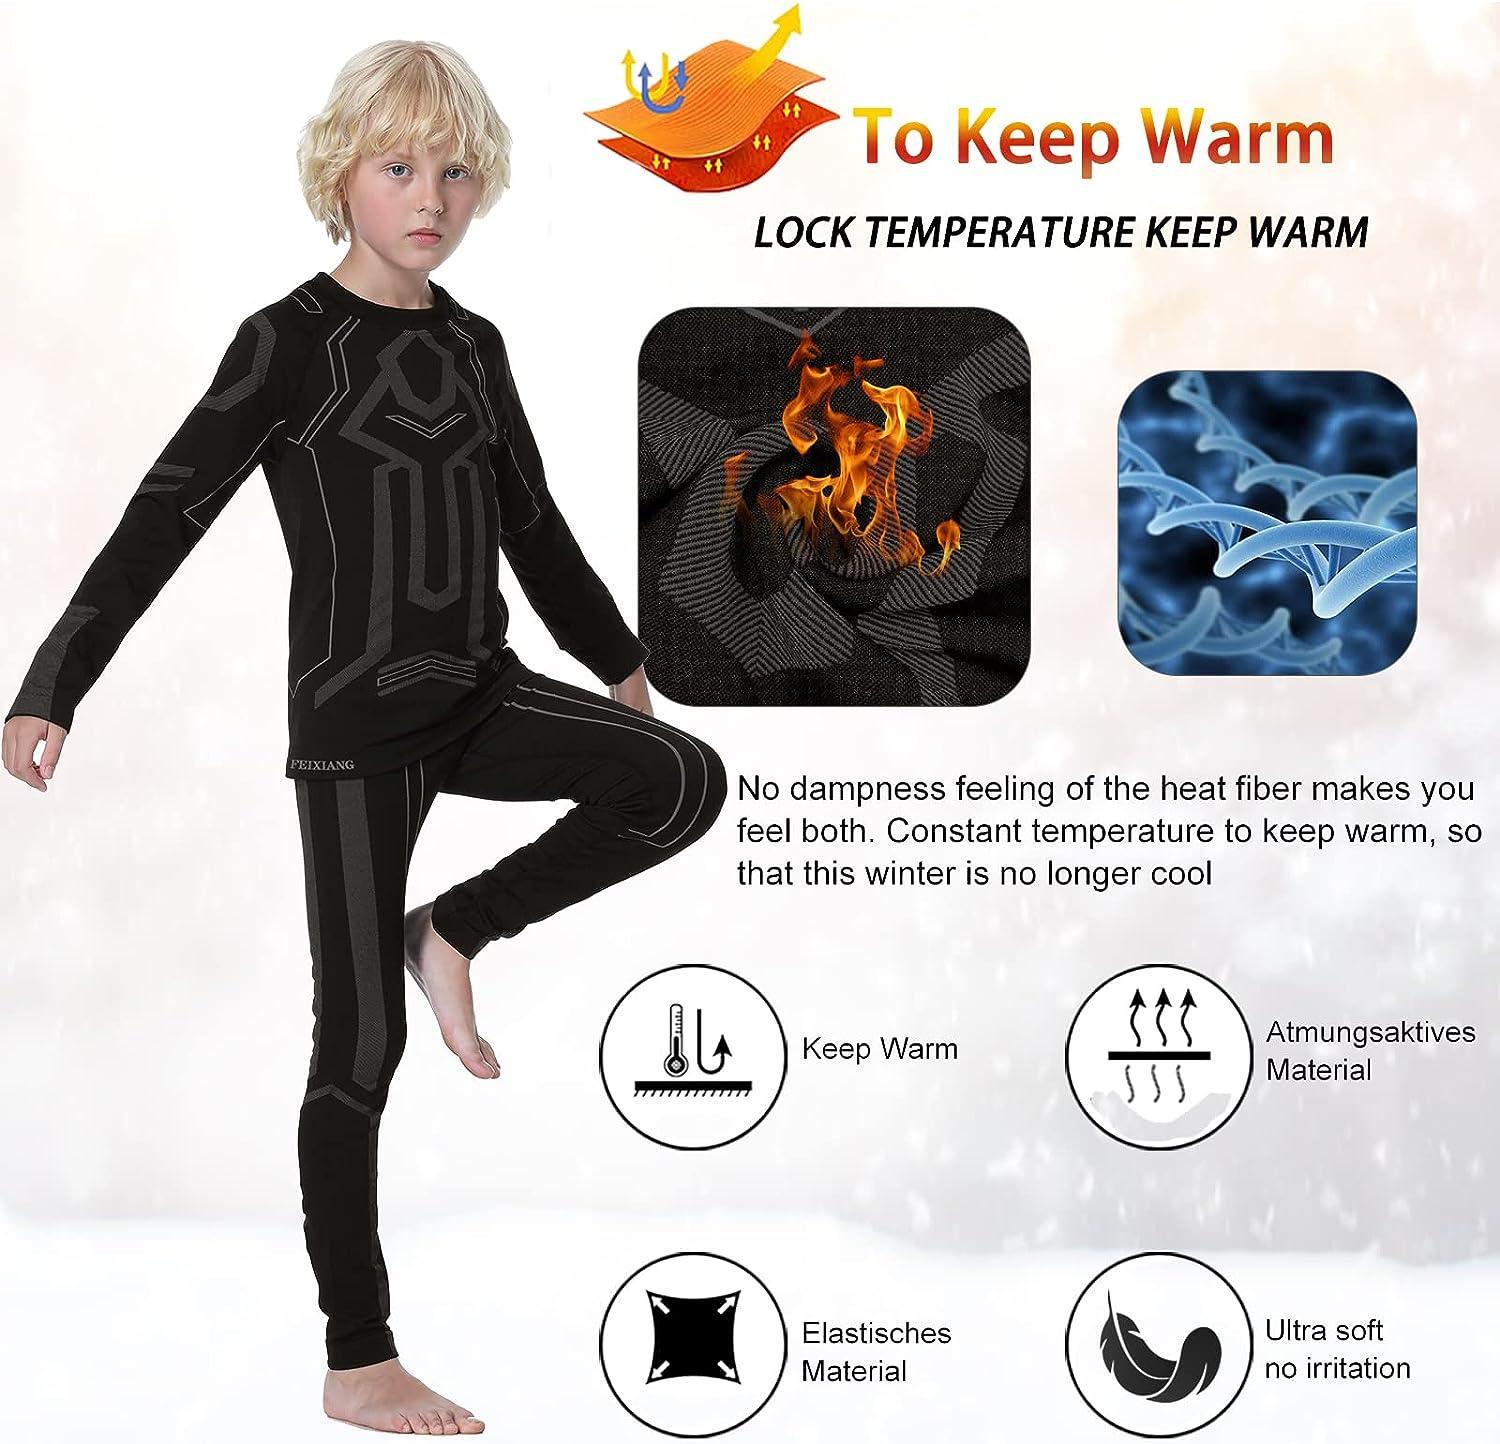  MEETWEE Thermal Underwear For Women, Winter Warm Base Layer  Top & Bottom Set Ski Cold Weather Gear